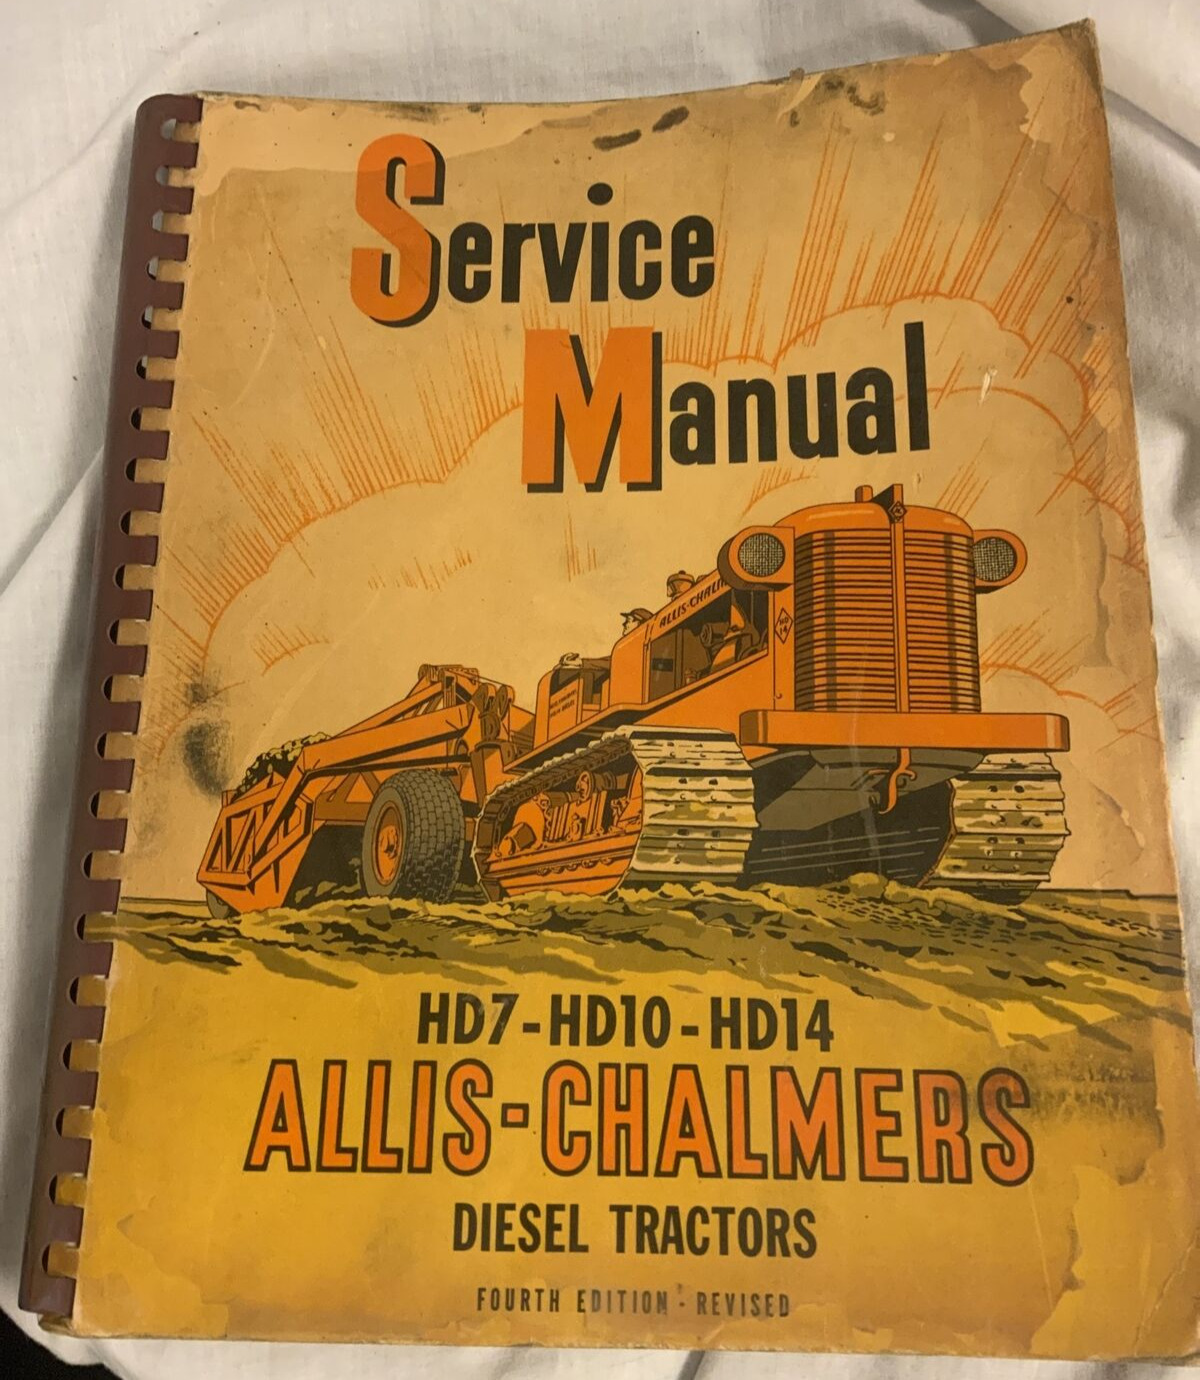 ORIGINAL ALLIS CHALMERS HD-7 HD-10 HD-14 DIESEL SERVICE MANUAL 4TH EDITION 1949